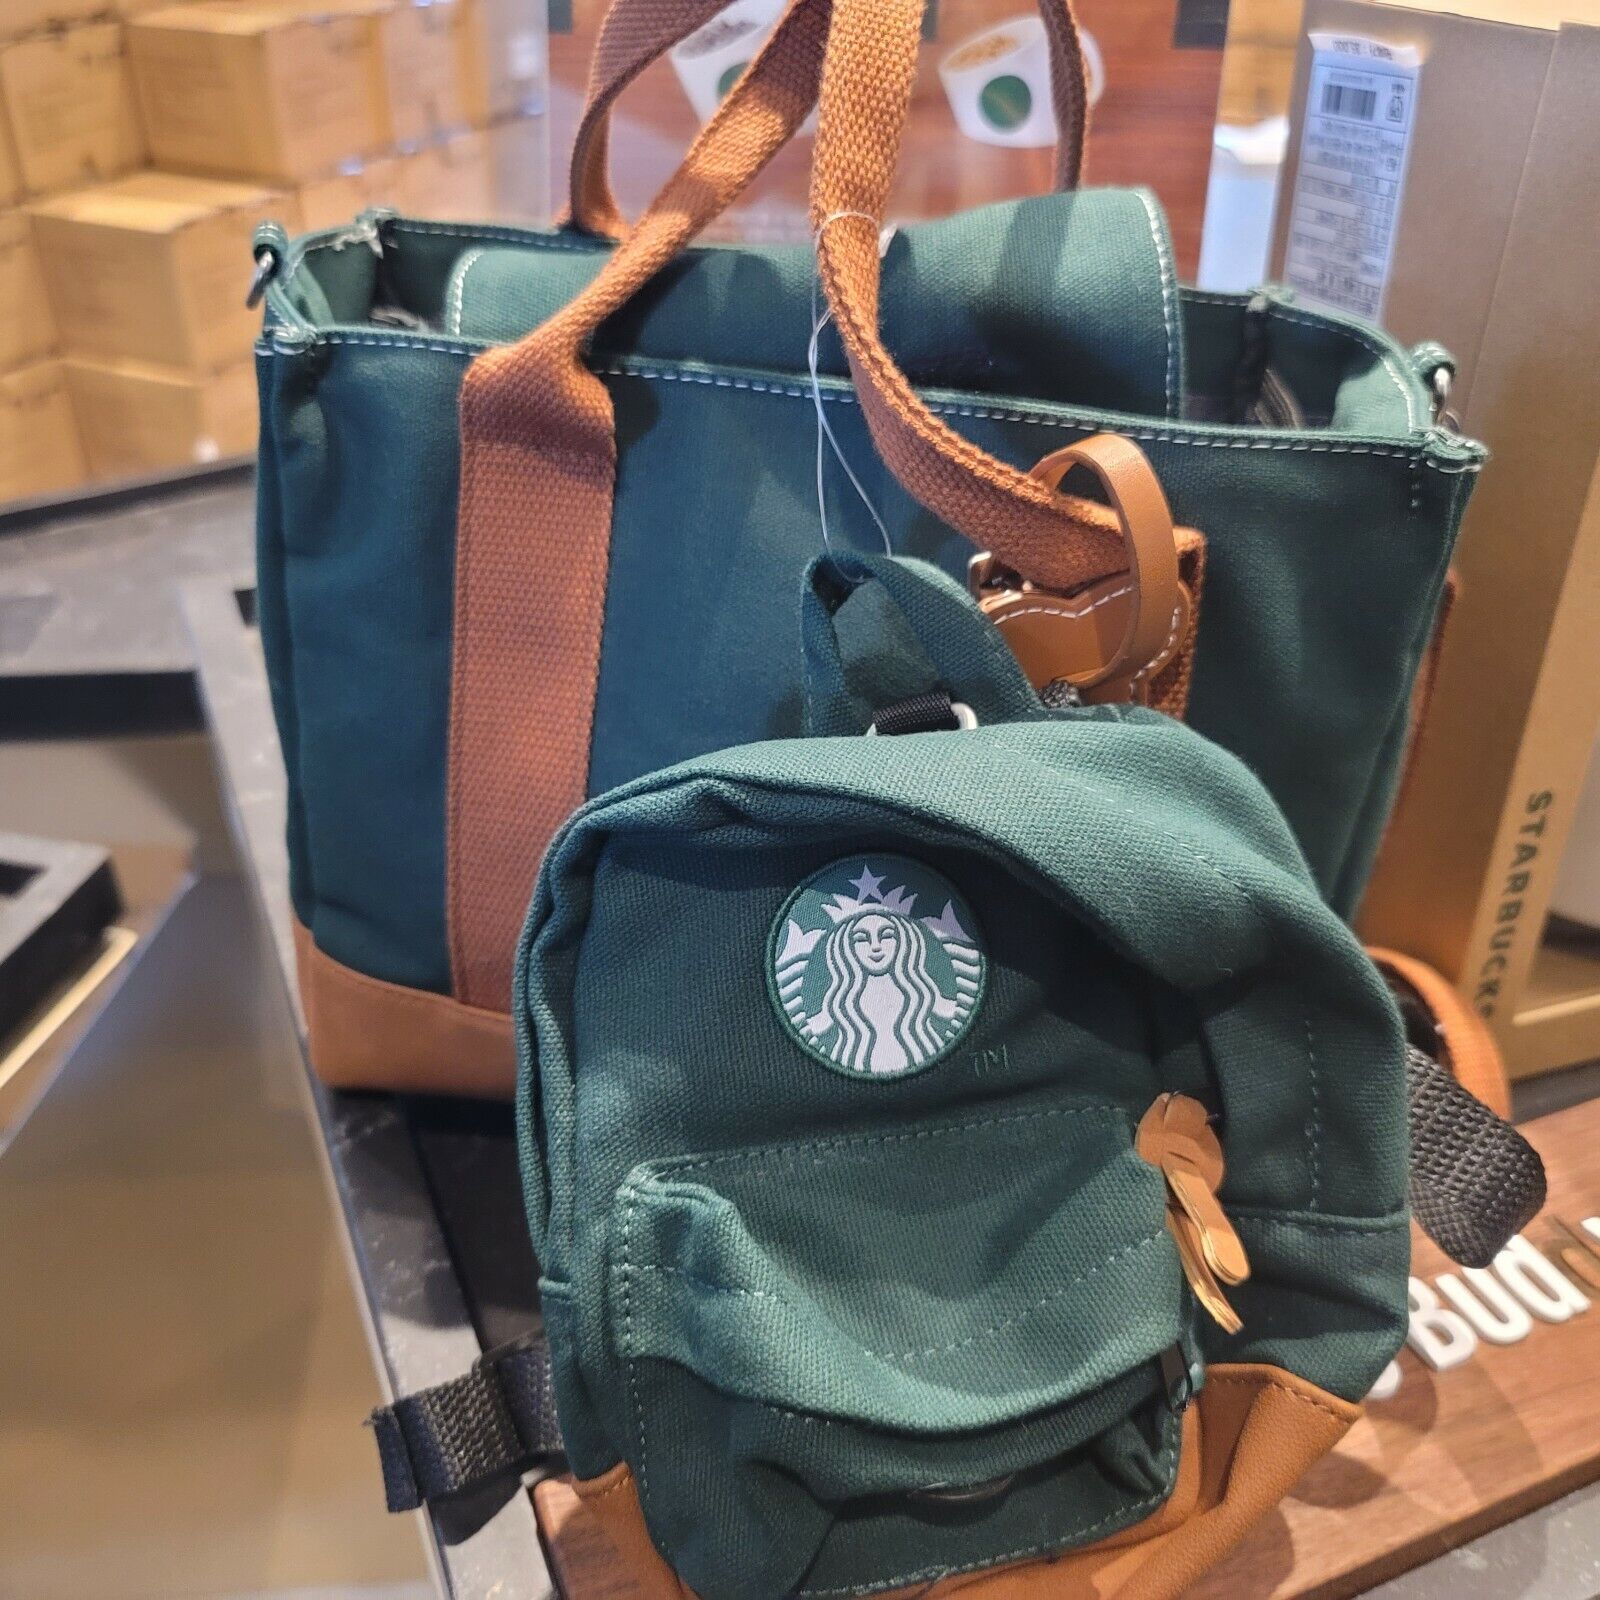 Starbucks korea 22 Family bag set The BukHangang R store